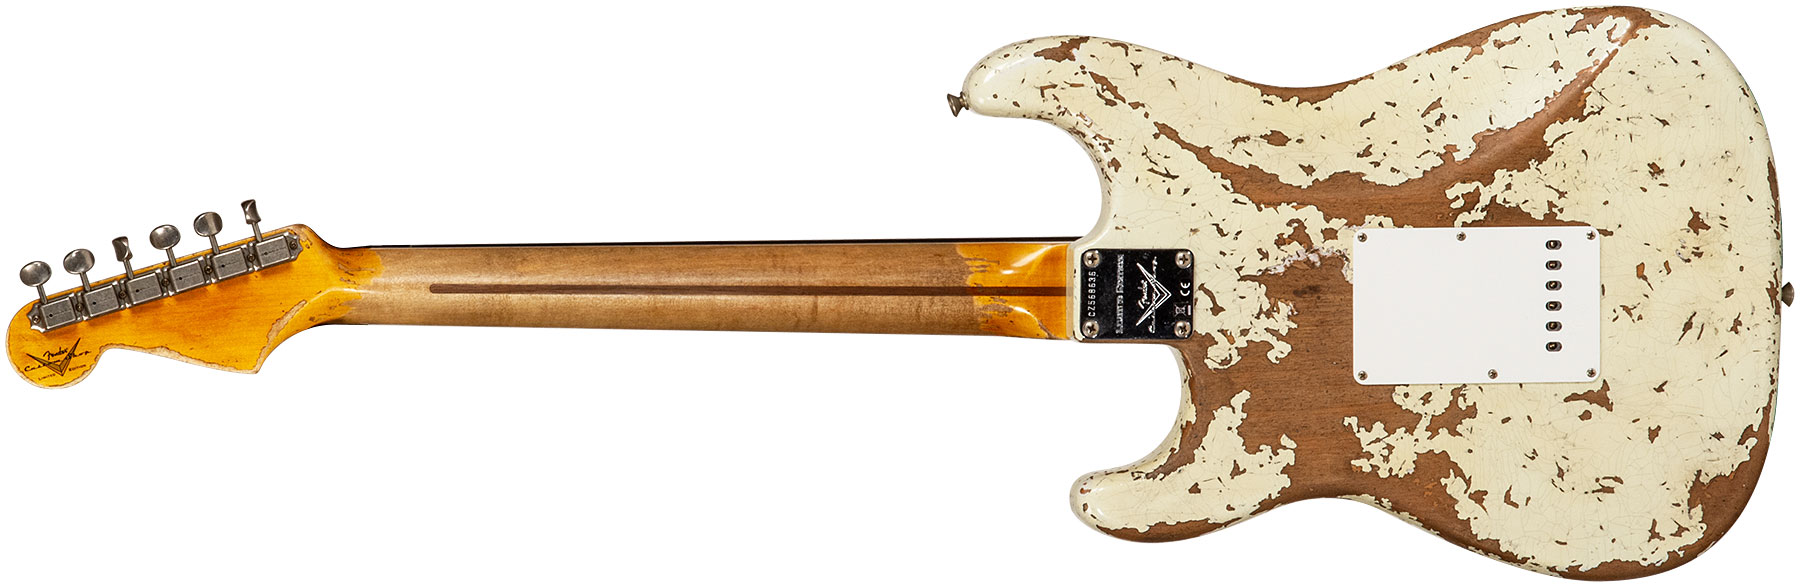 Fender Custom Shop Strat 1956 3s Trem Mn #cz568636 - Super Heavy Relic Aged India Ivory - Str shape electric guitar - Variation 1